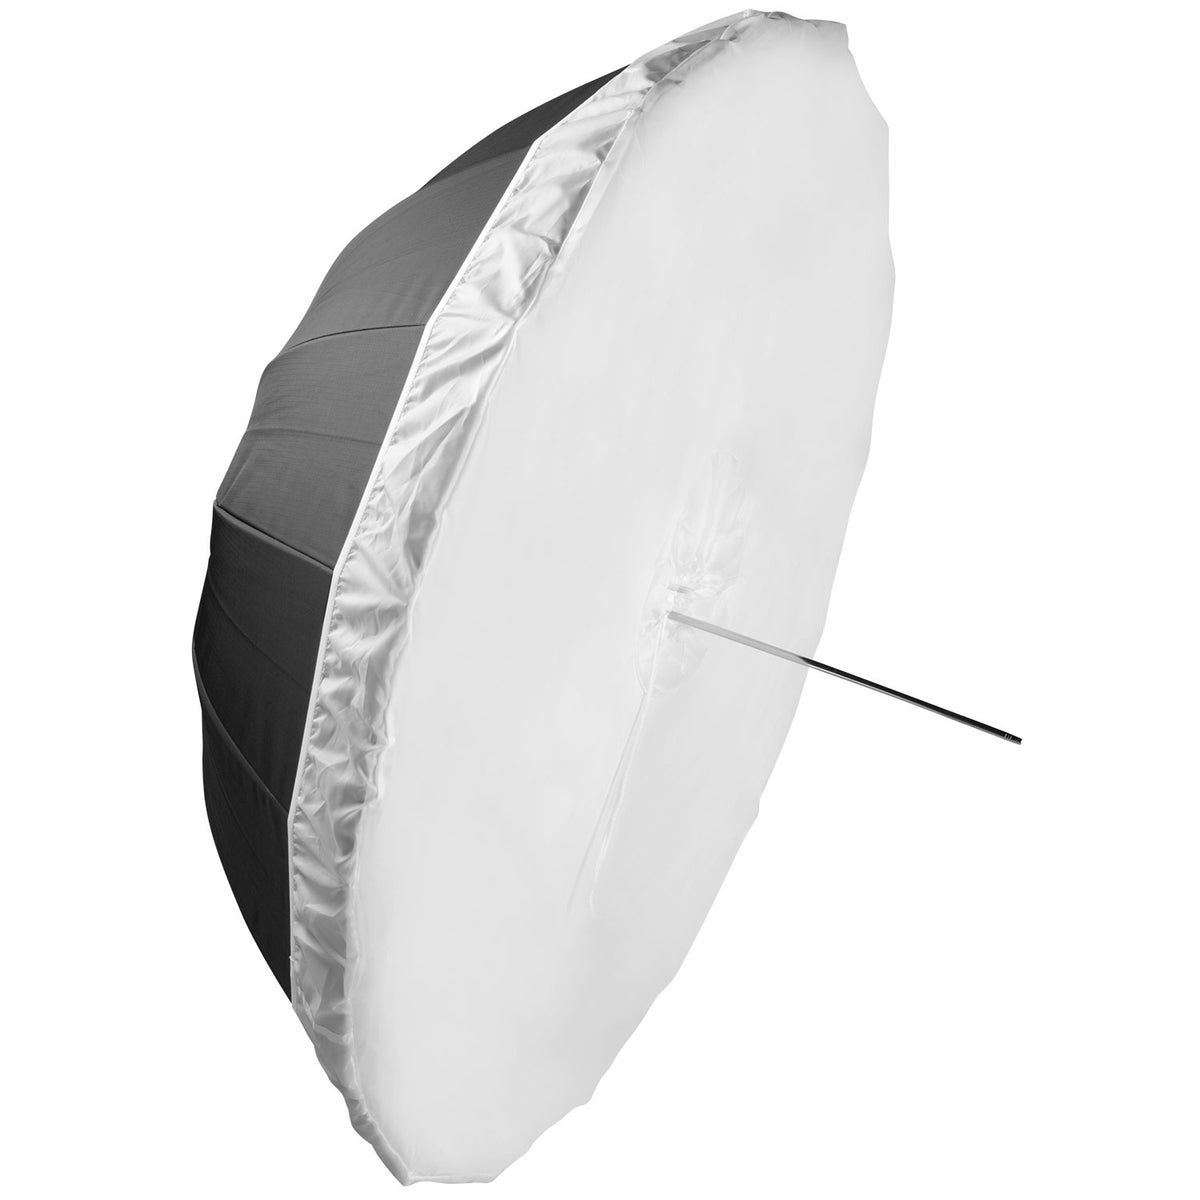 Diffusion Fabric for 43" Deep Umbrella